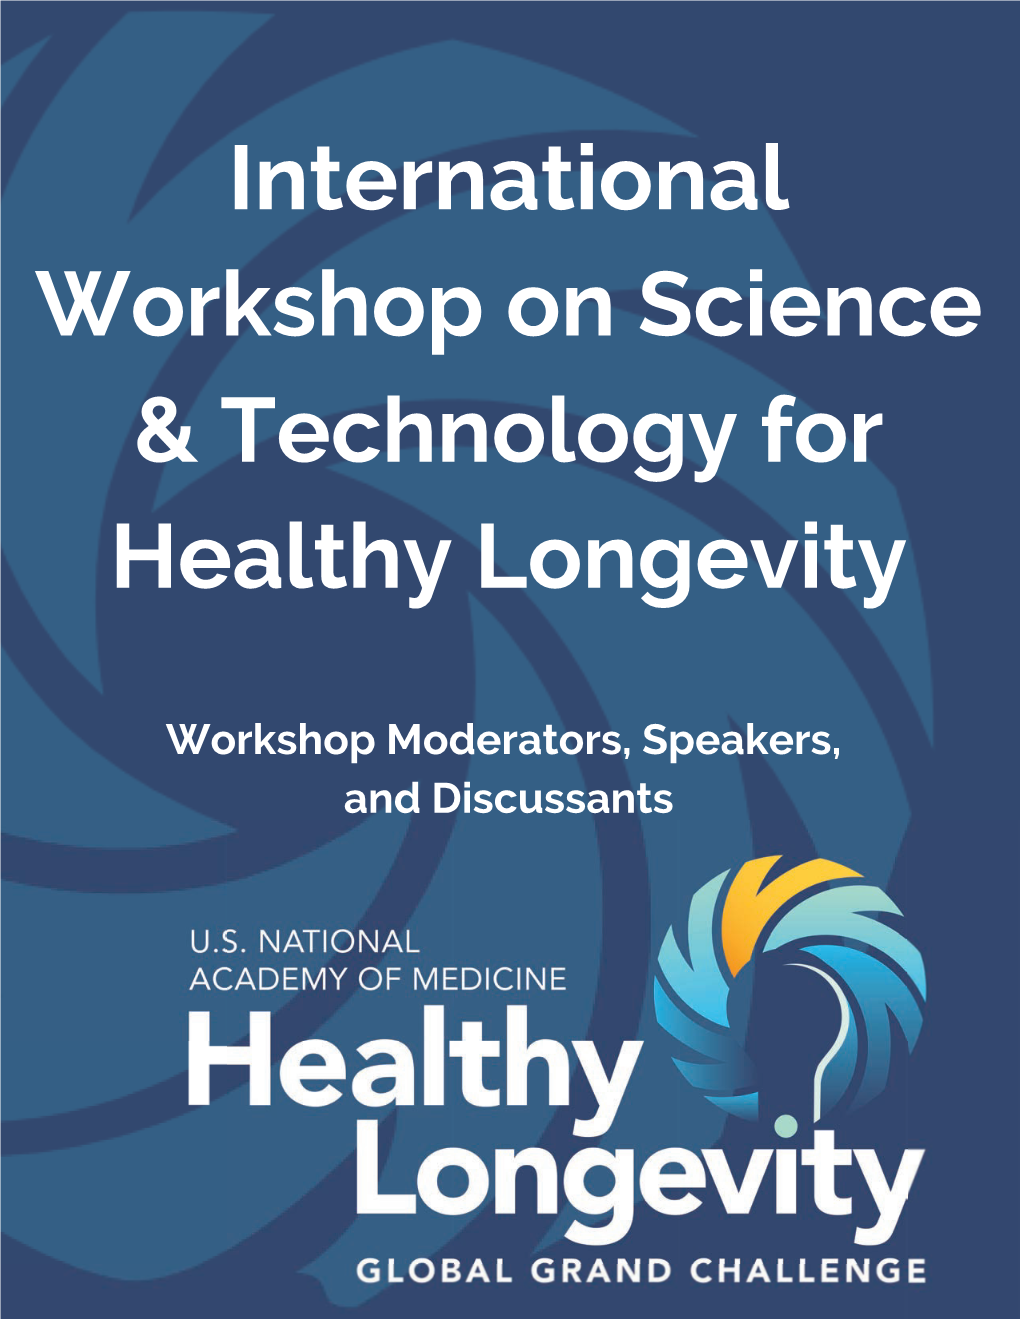 International Workshop on Science & Technology for Healthy Longevity